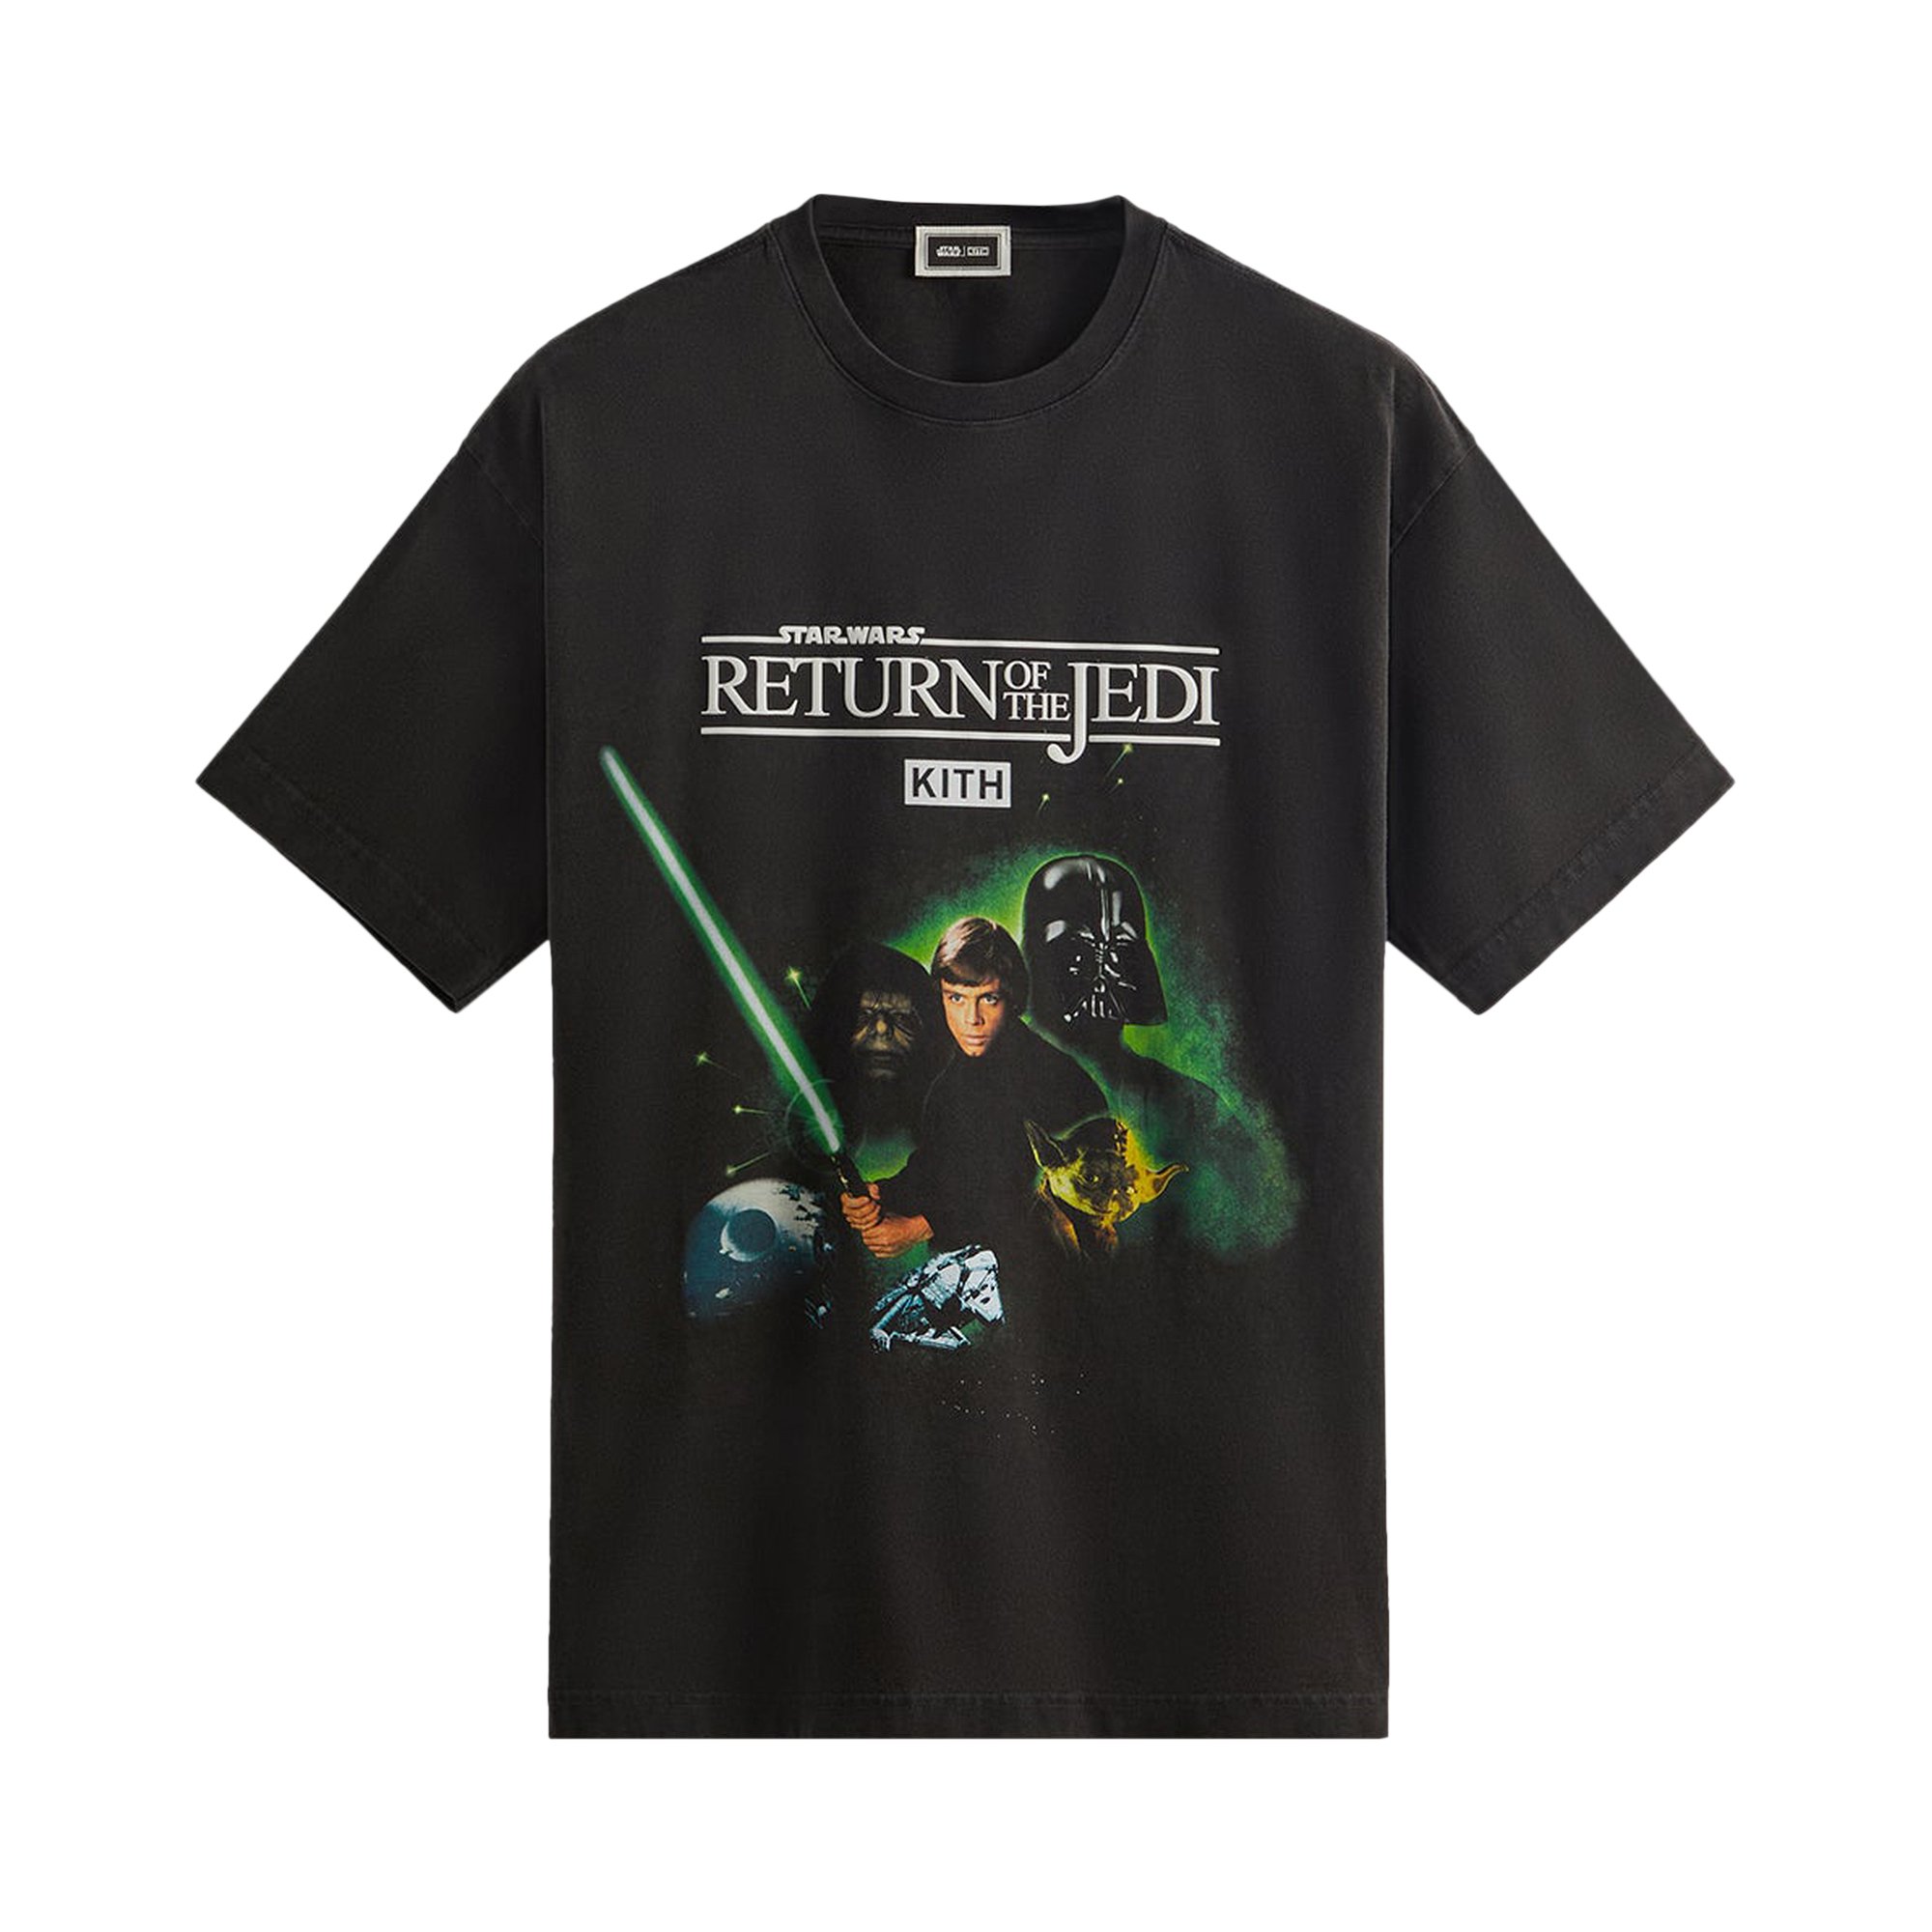 Винтажная футболка с плакатом Kith x Star Wars Luke, Черная